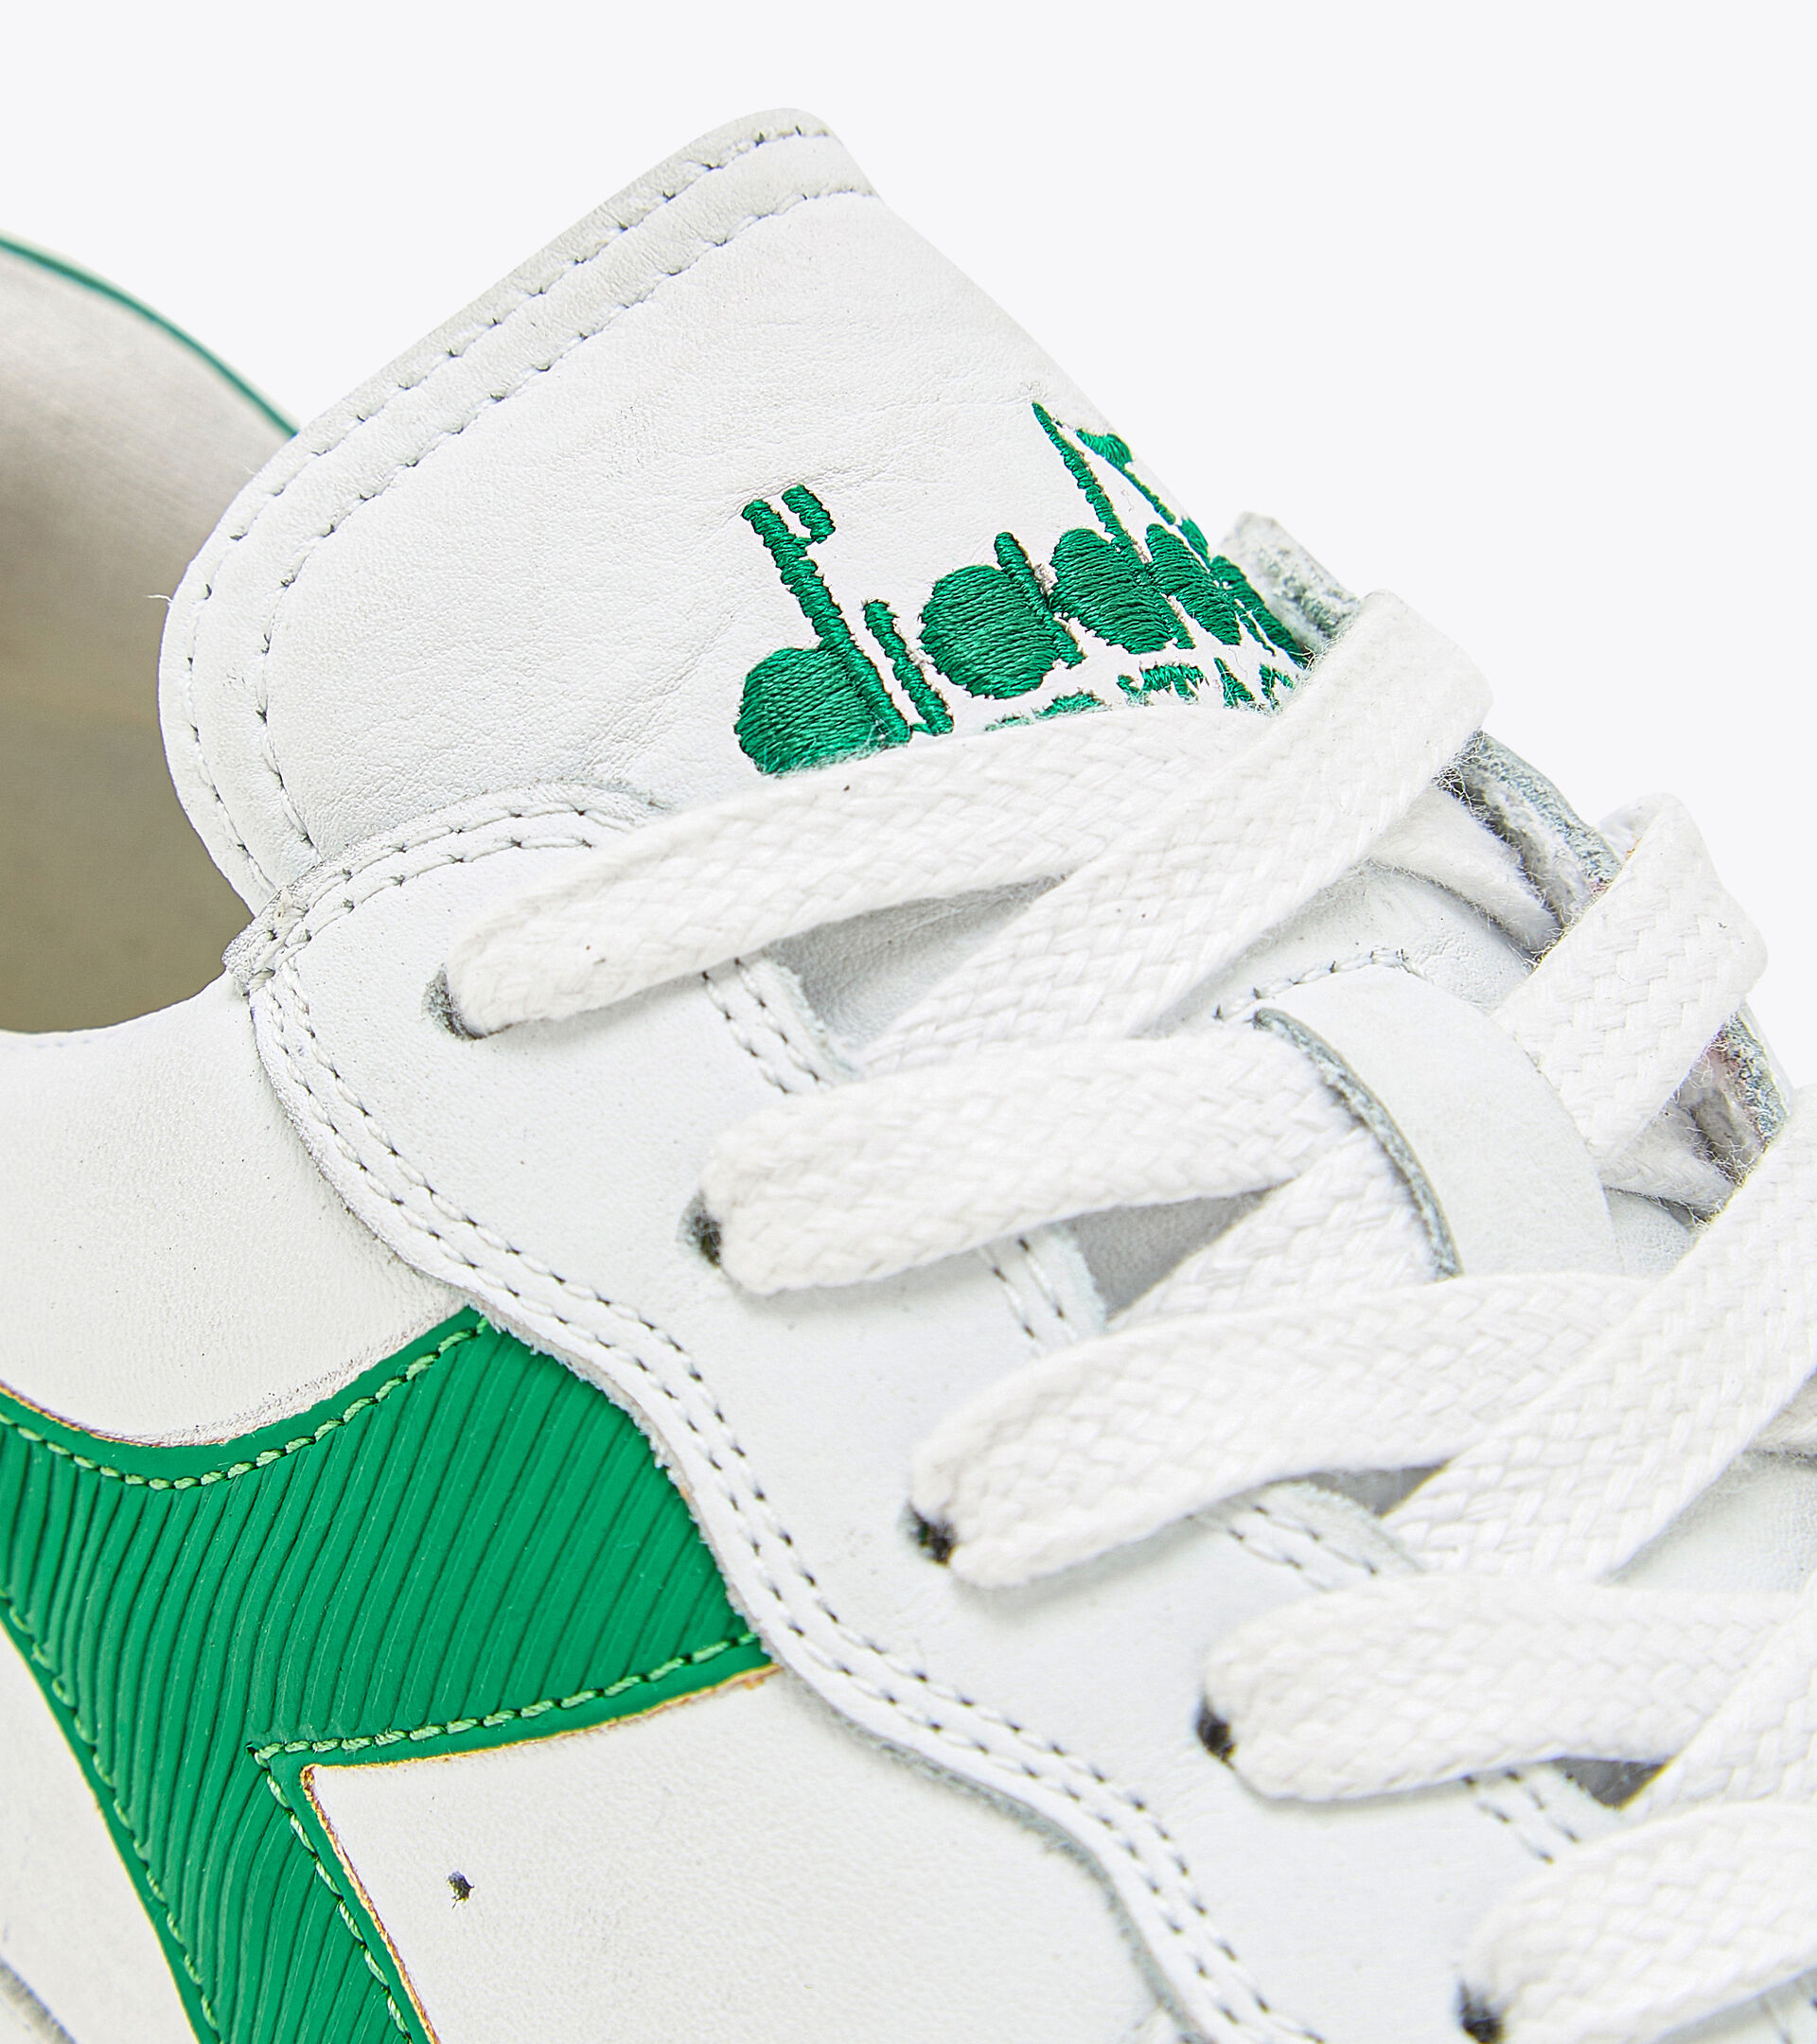 Heritage shoes - Unisex MI BASKET LOW USED WHITE/VERDANT GREEN - Diadora